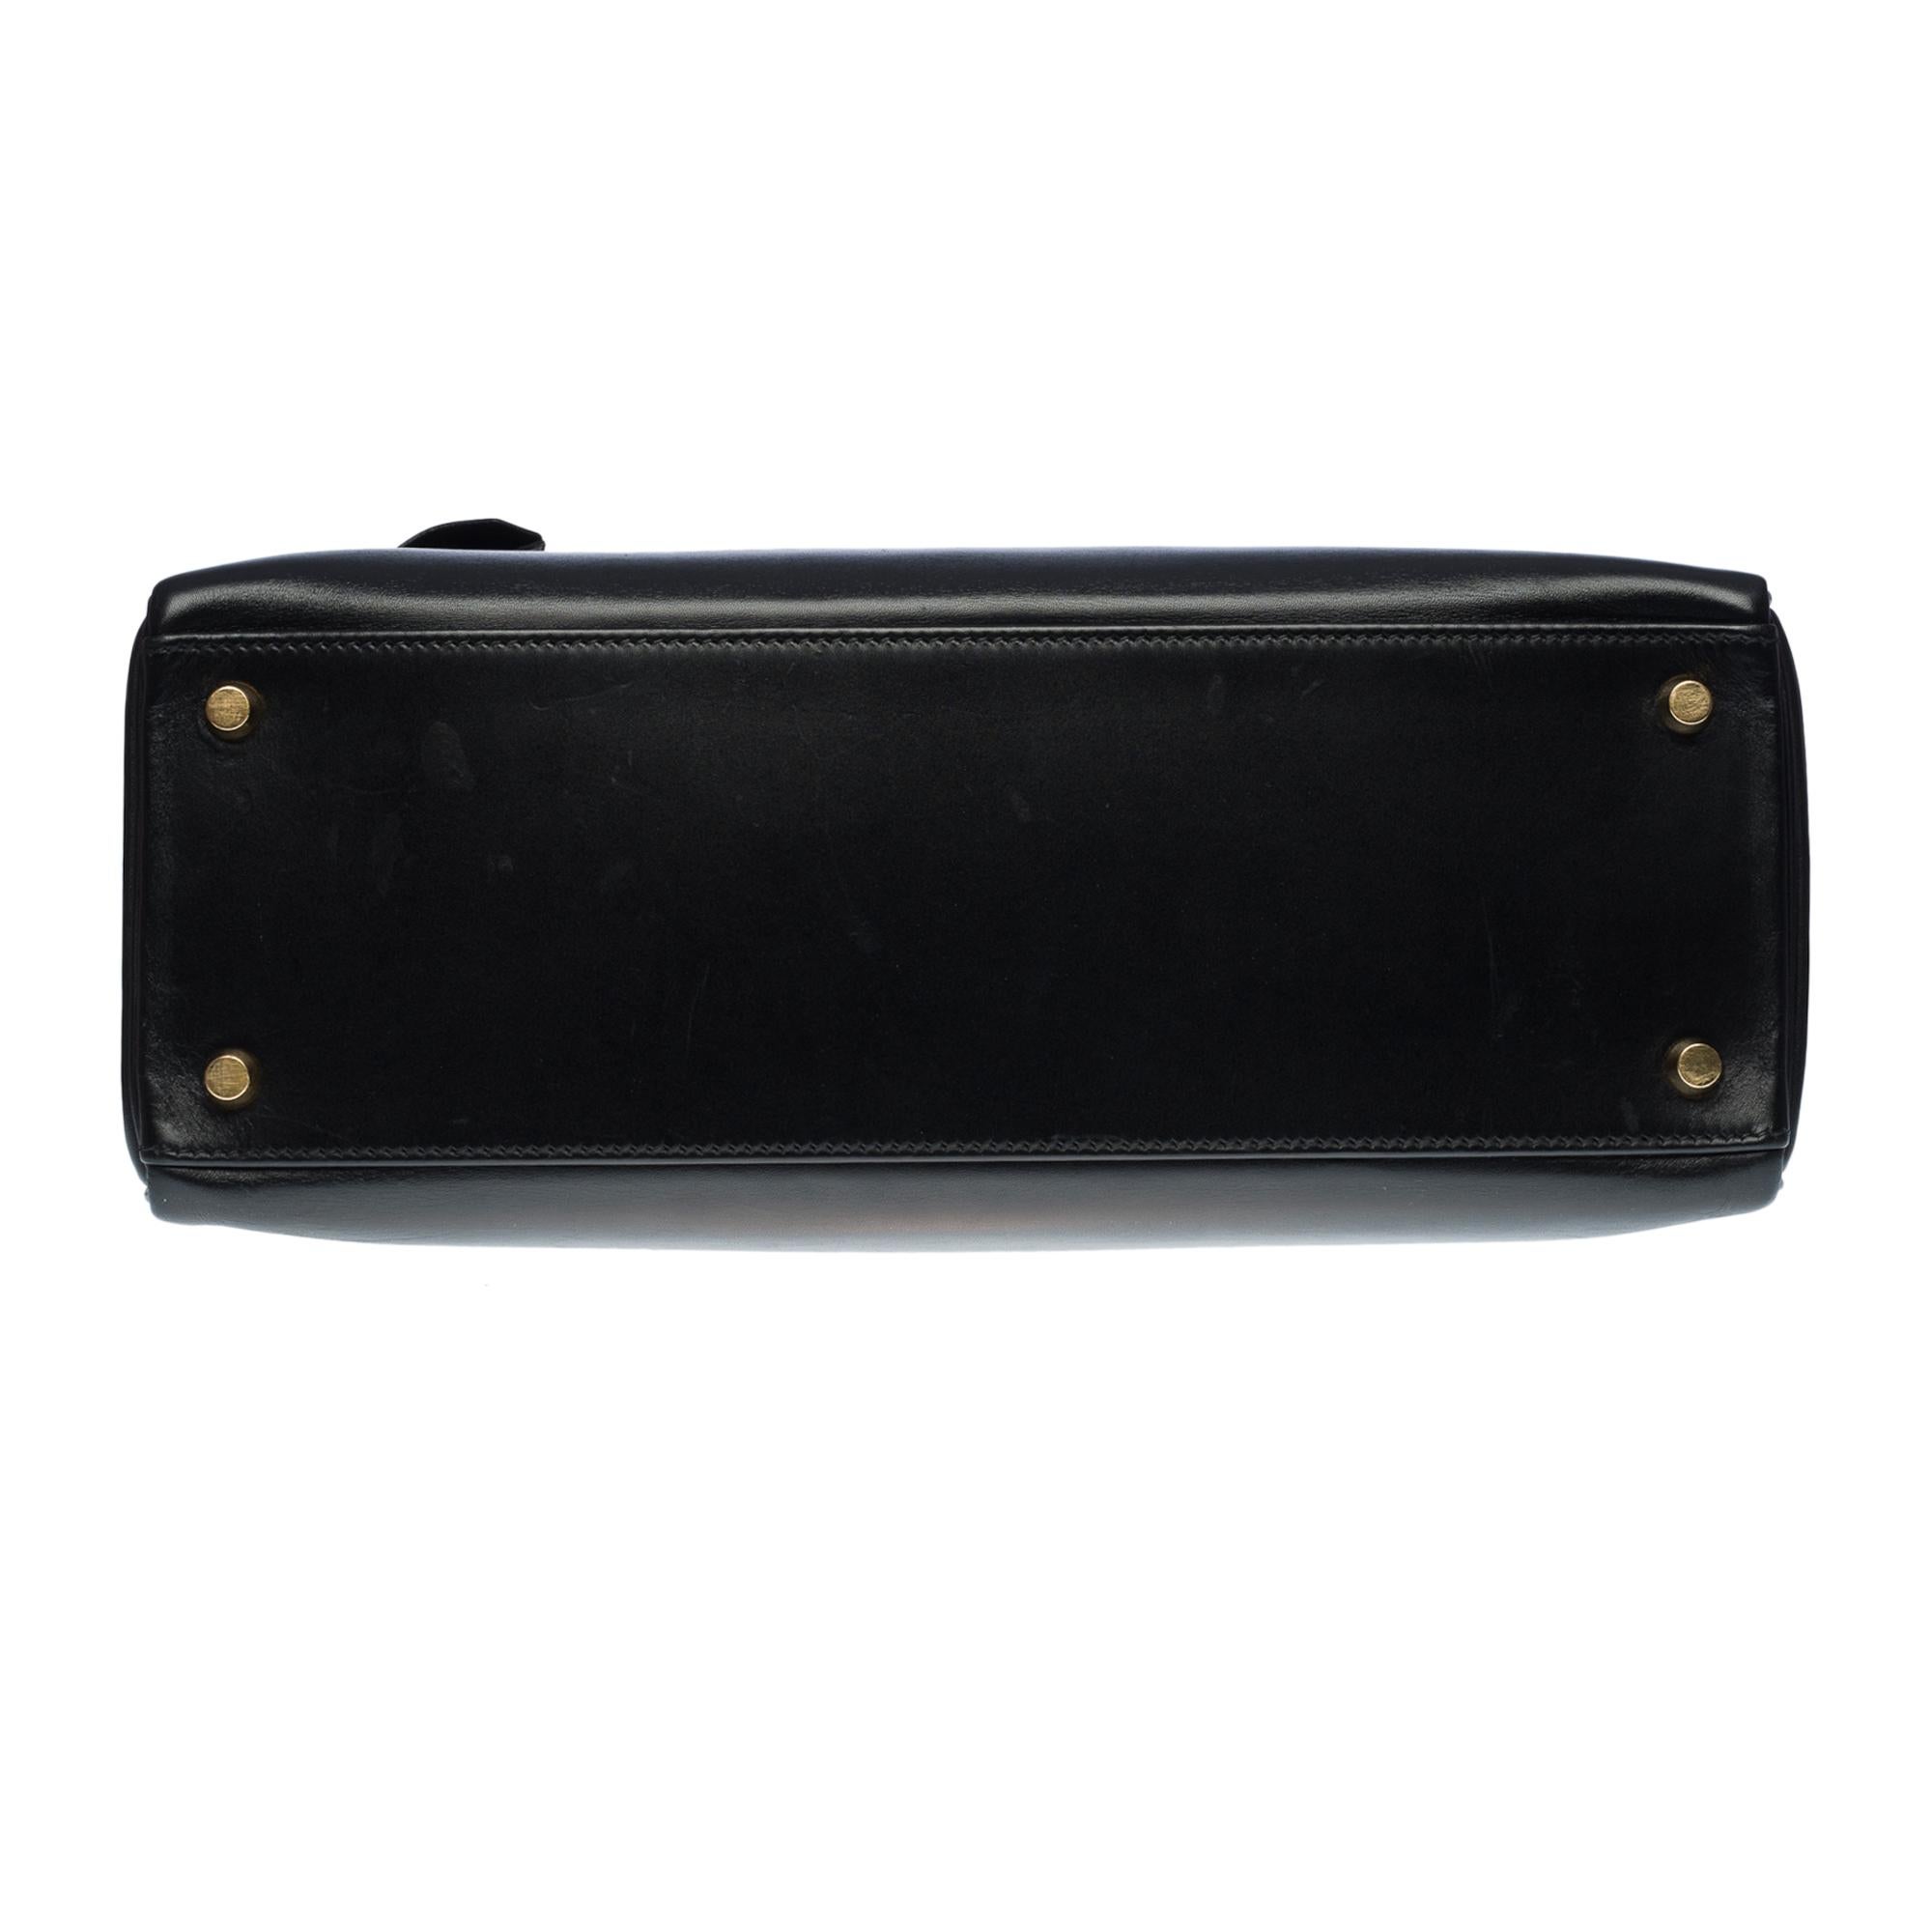 Rare Hermès Kelly 32 retourne handbag strap in black box calfskin leather, GHW 3